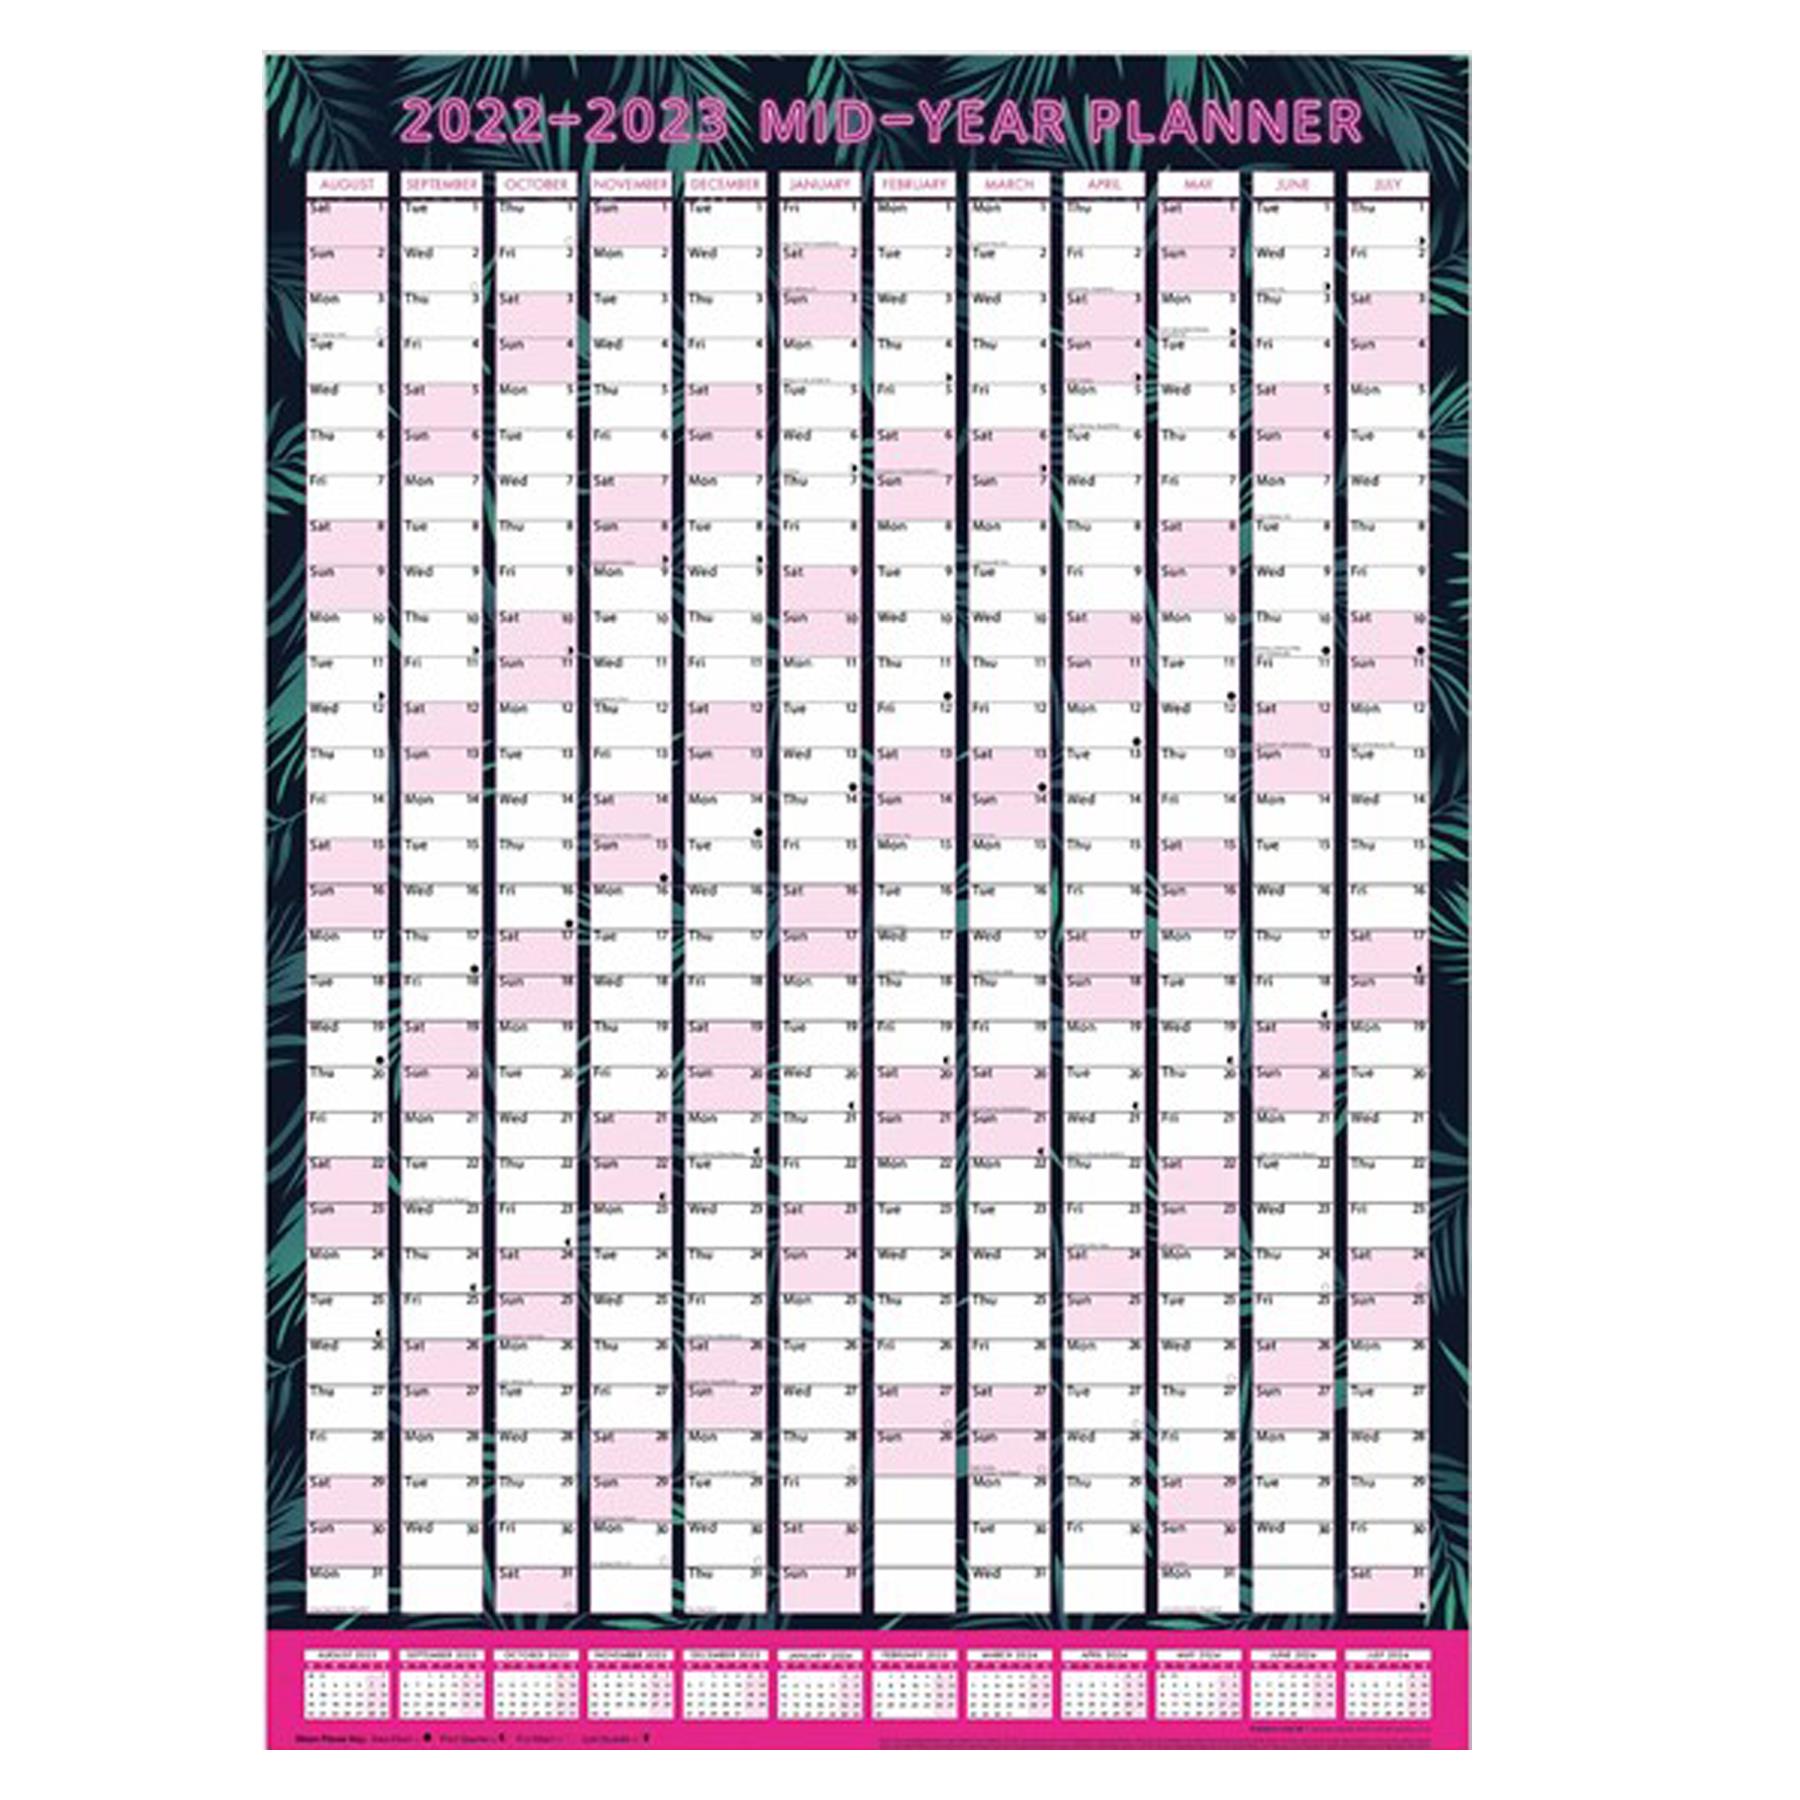 3921 Academic 2022- 2023 Mid-Year A1 Wall Planner Calendar 84cm x 60cm